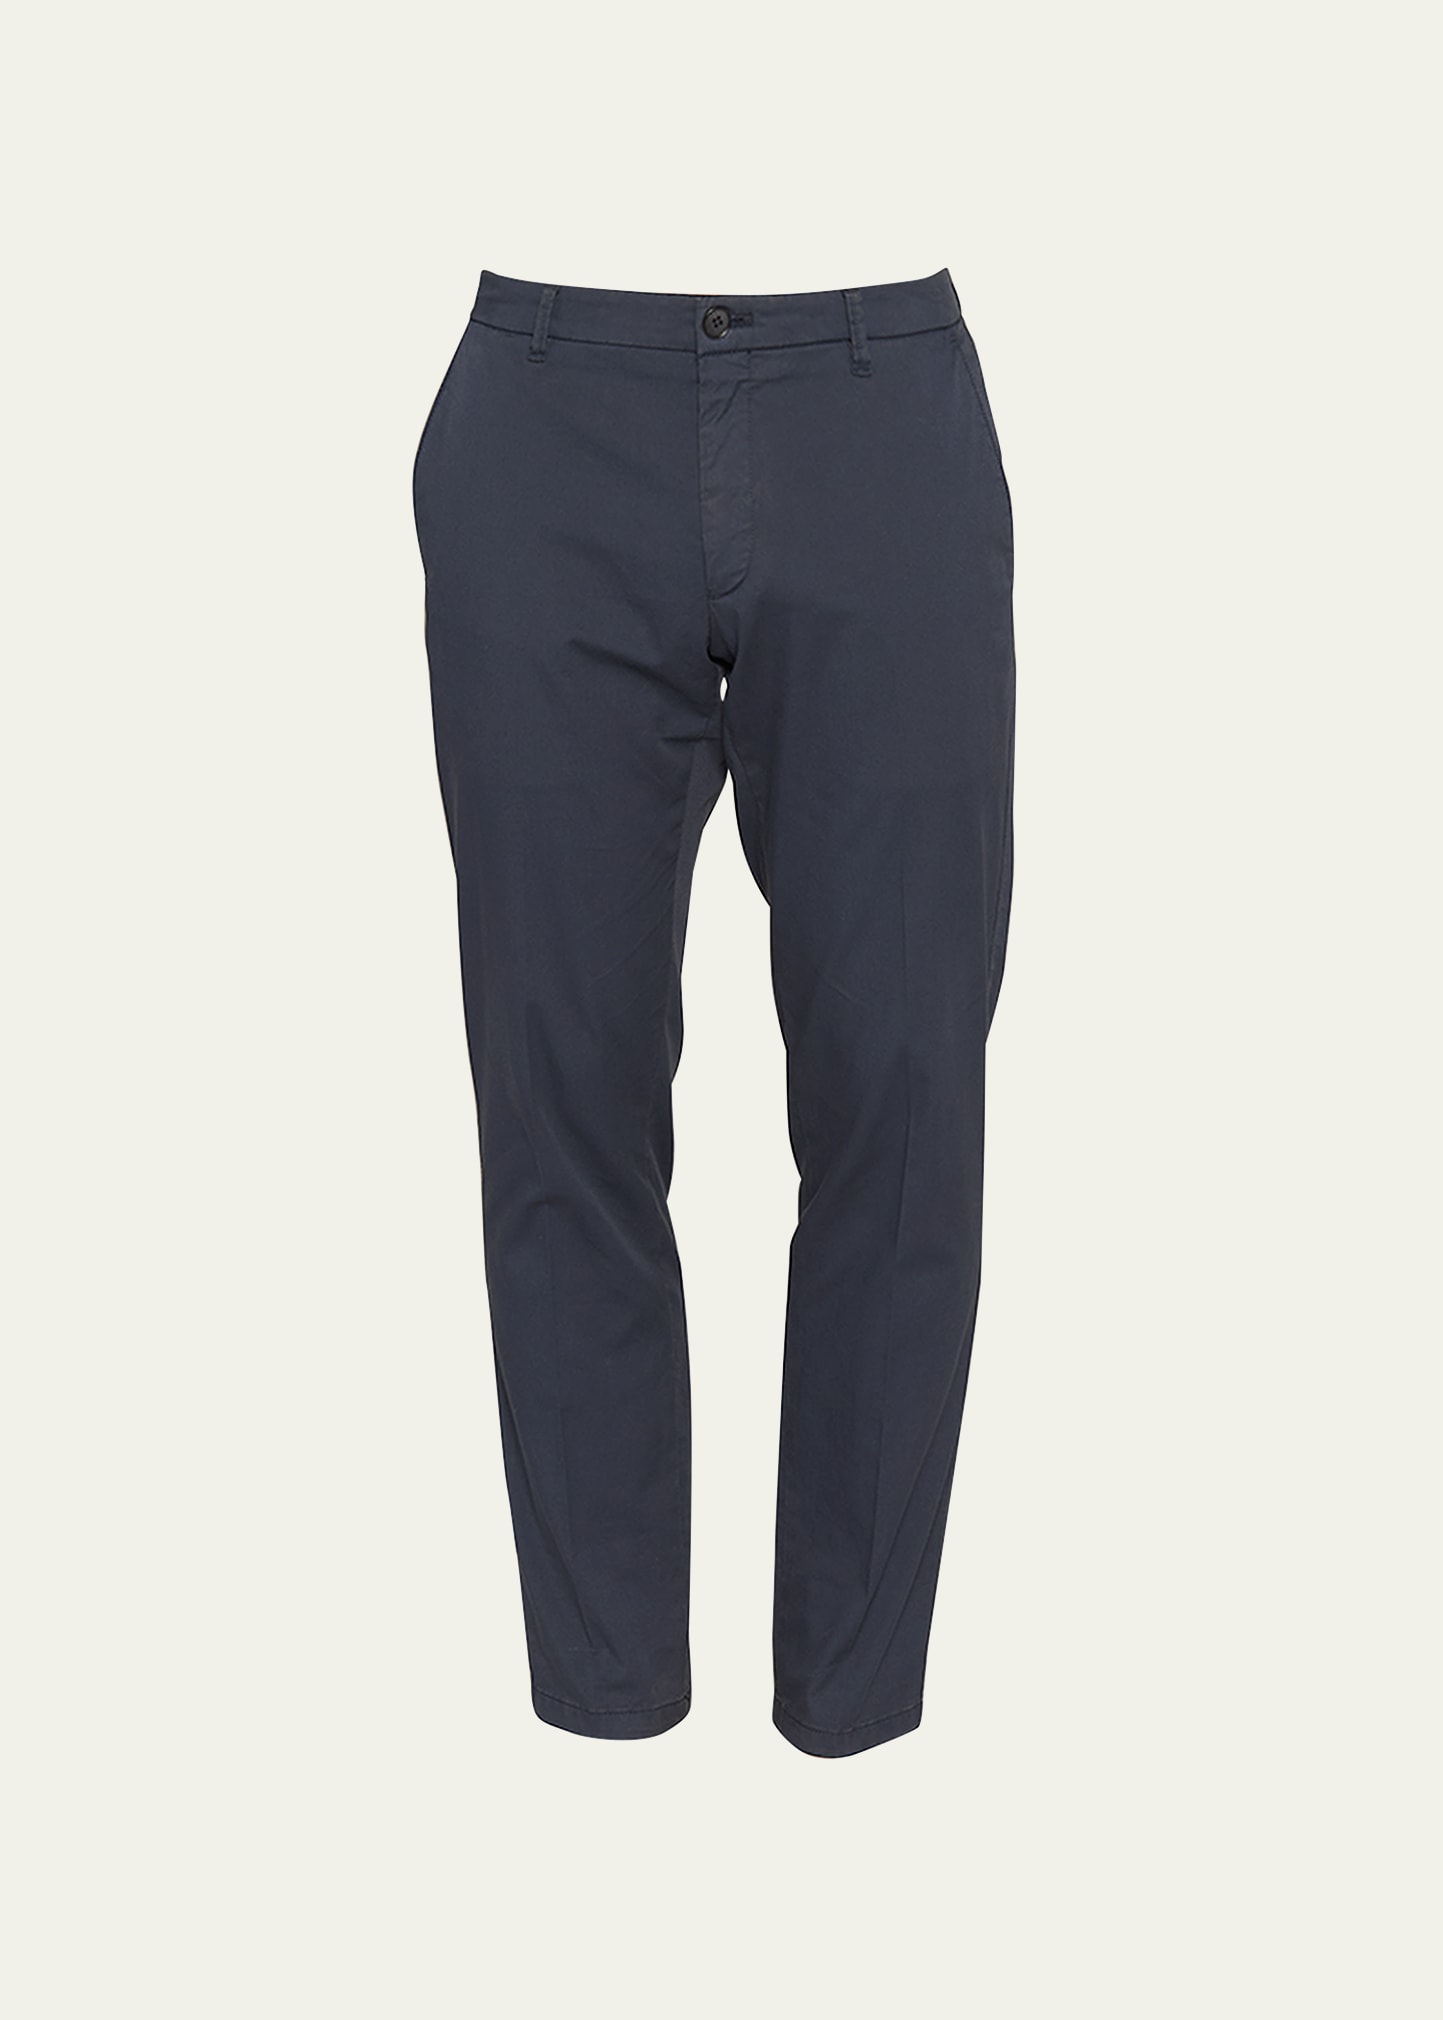 Giorgio Armani Men's Cotton-stretch Straight Leg Pants In Solid Blue Navy